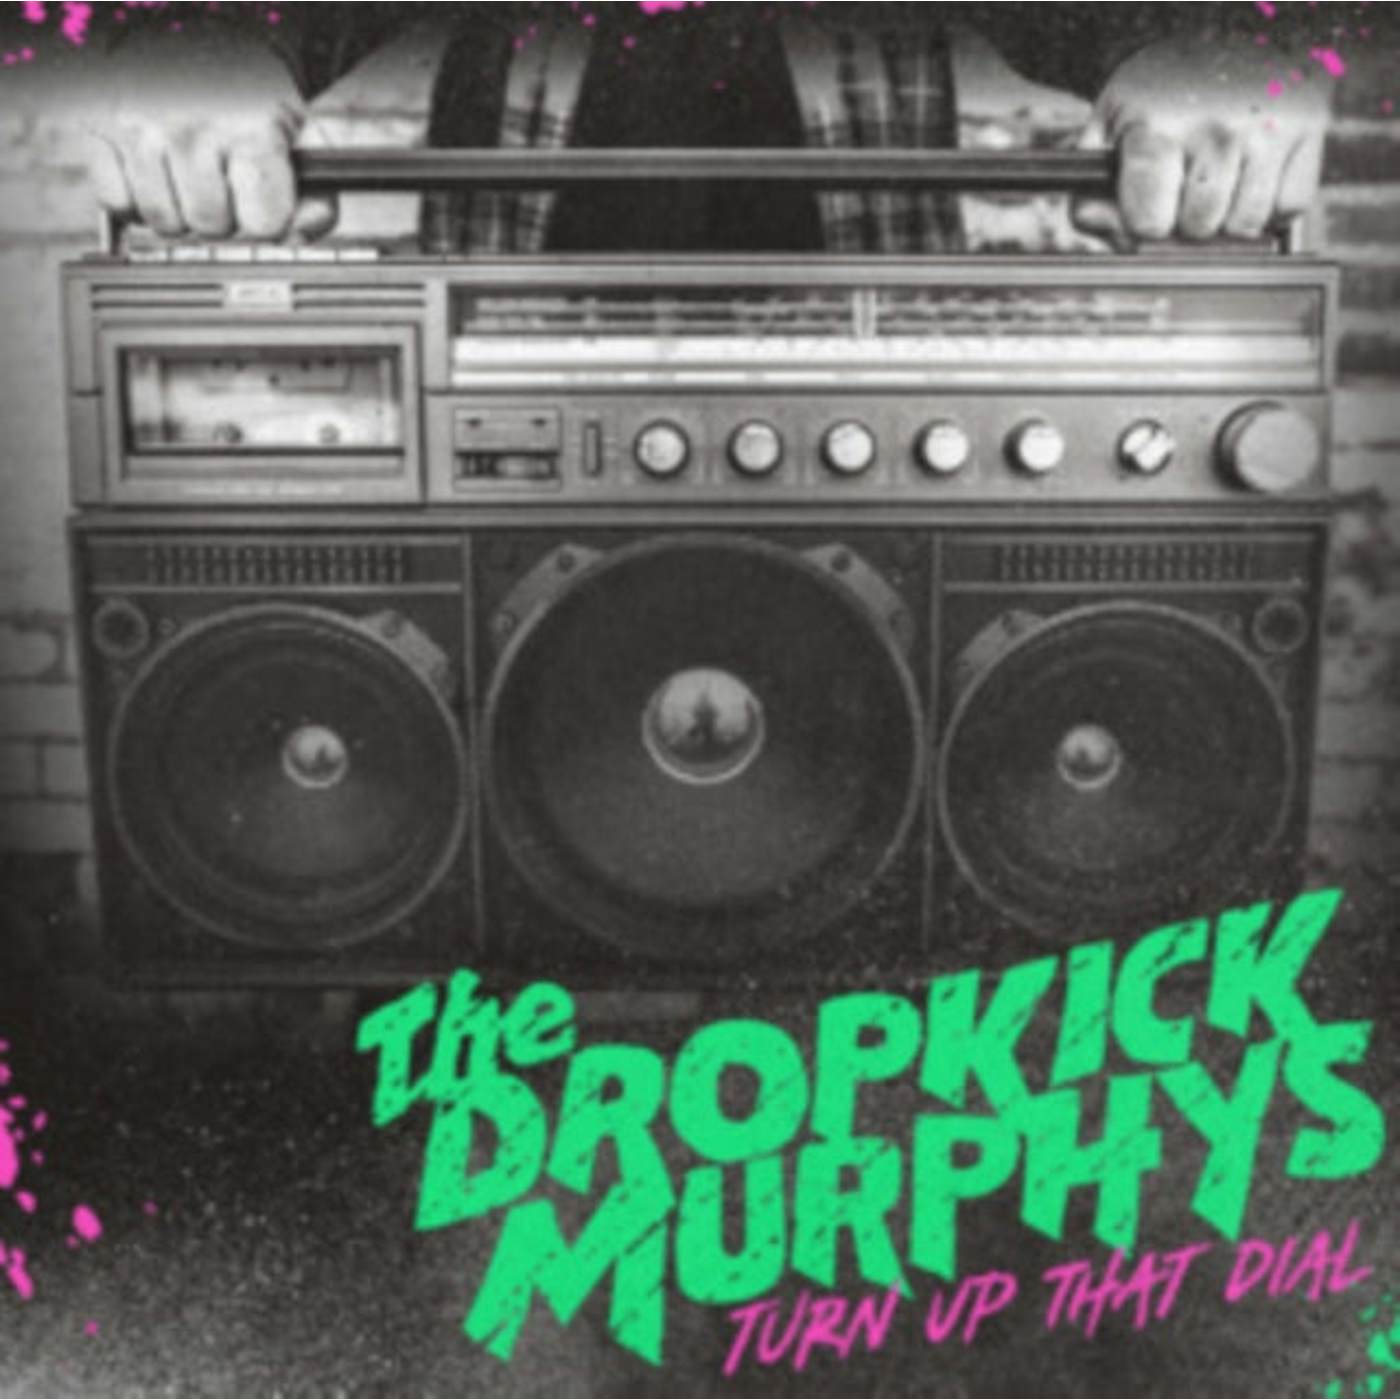 The Dropkick Murphys LP Vinyl Record - Turn Up That Dial (Coloured Vinyl)